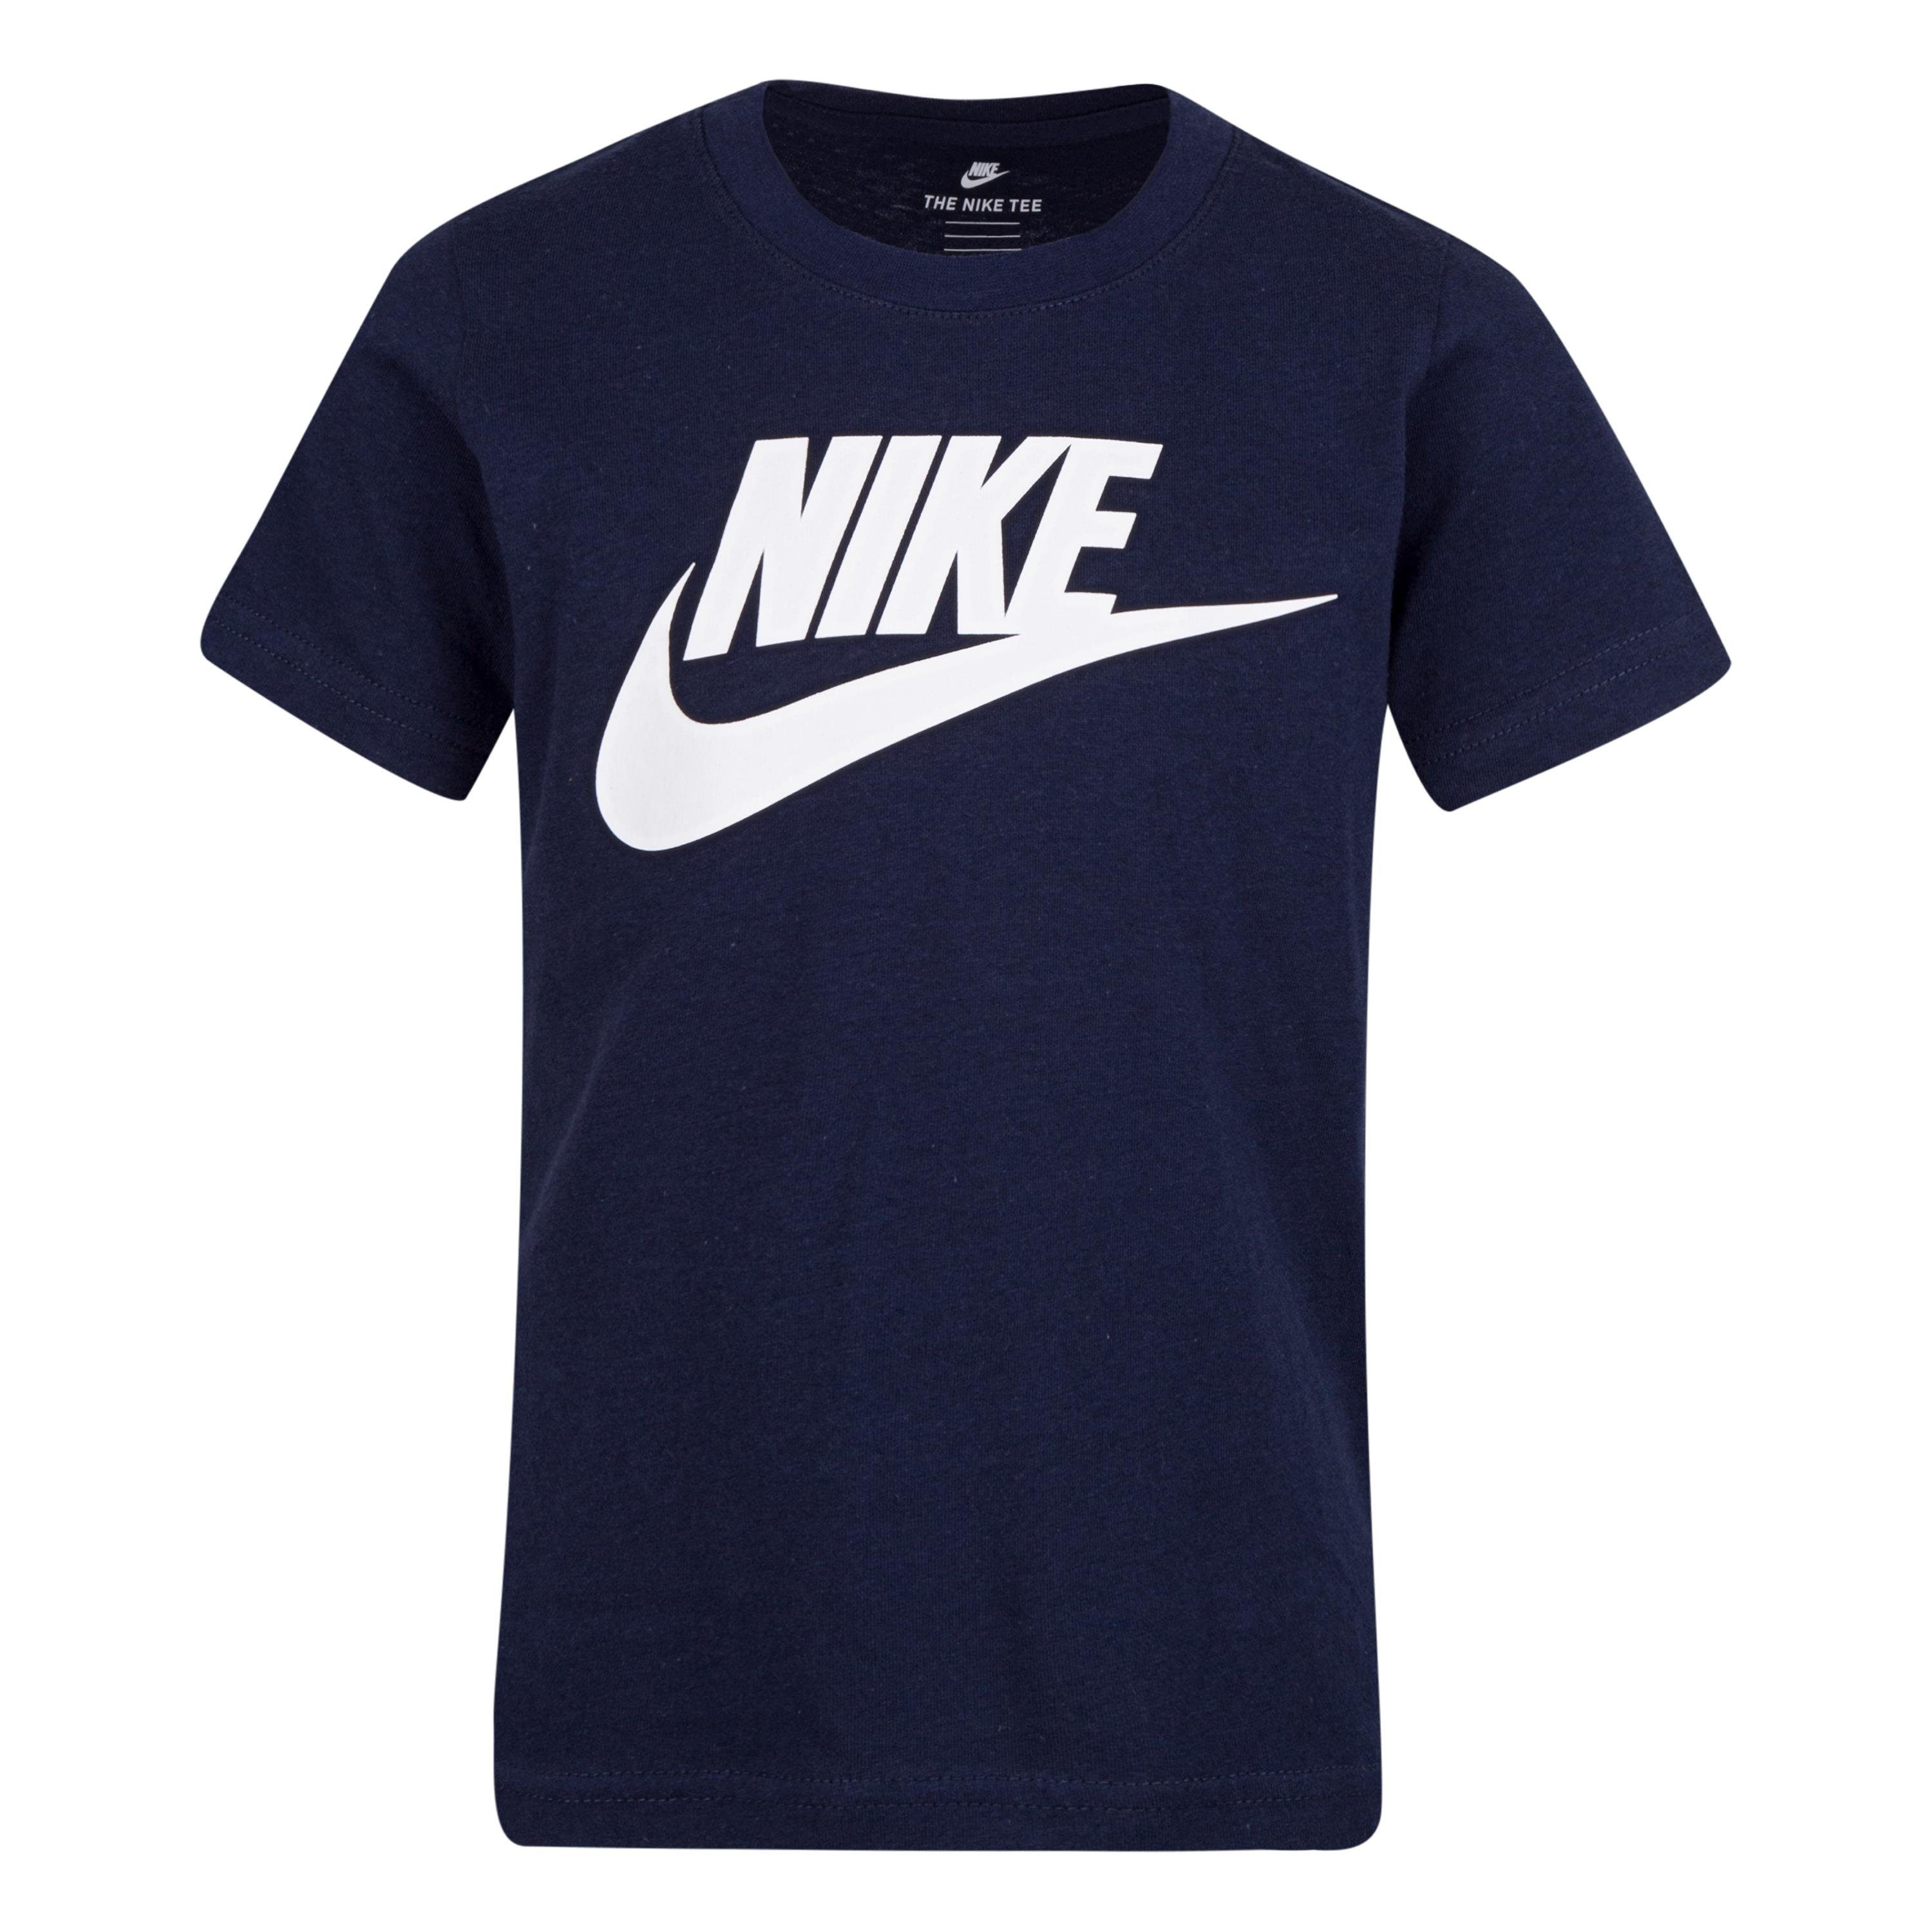 Nike Sportswear T-Shirt für marine-weiß Kinder FUTURA NIKE - NKB TEE Short Sleeve